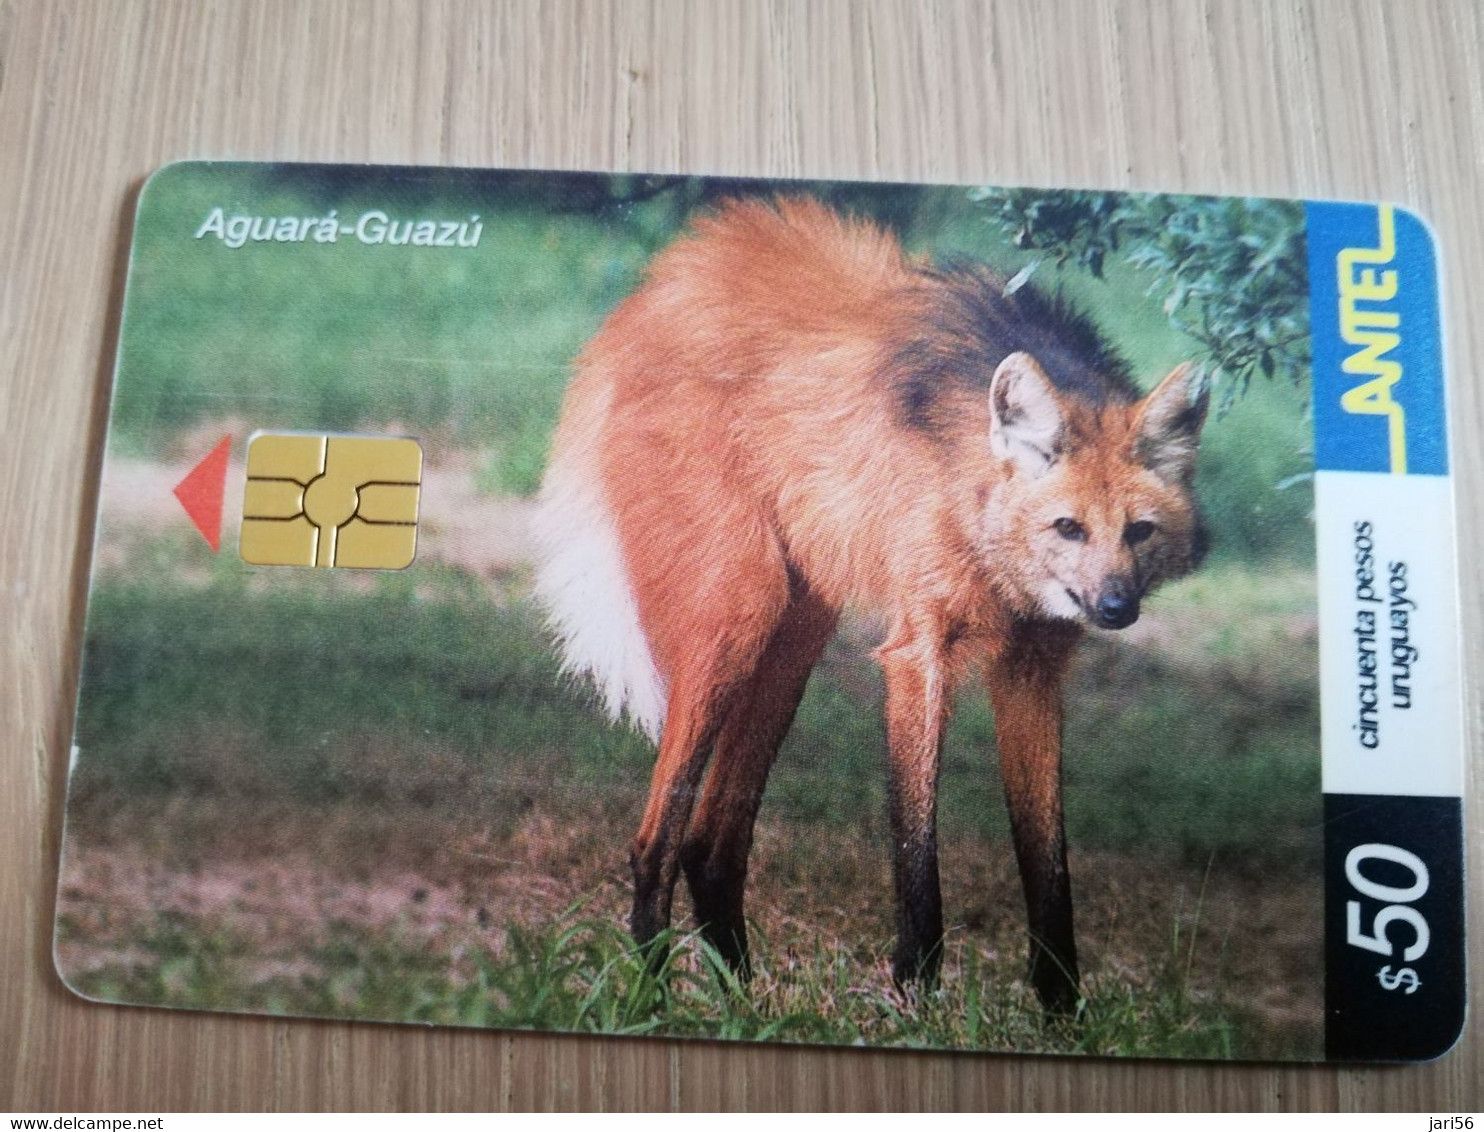 URUGUAY CHIPCARD  ANIMAL    $50   AGUARA-GUAZU           Nice Used Card    **4555** - Uruguay